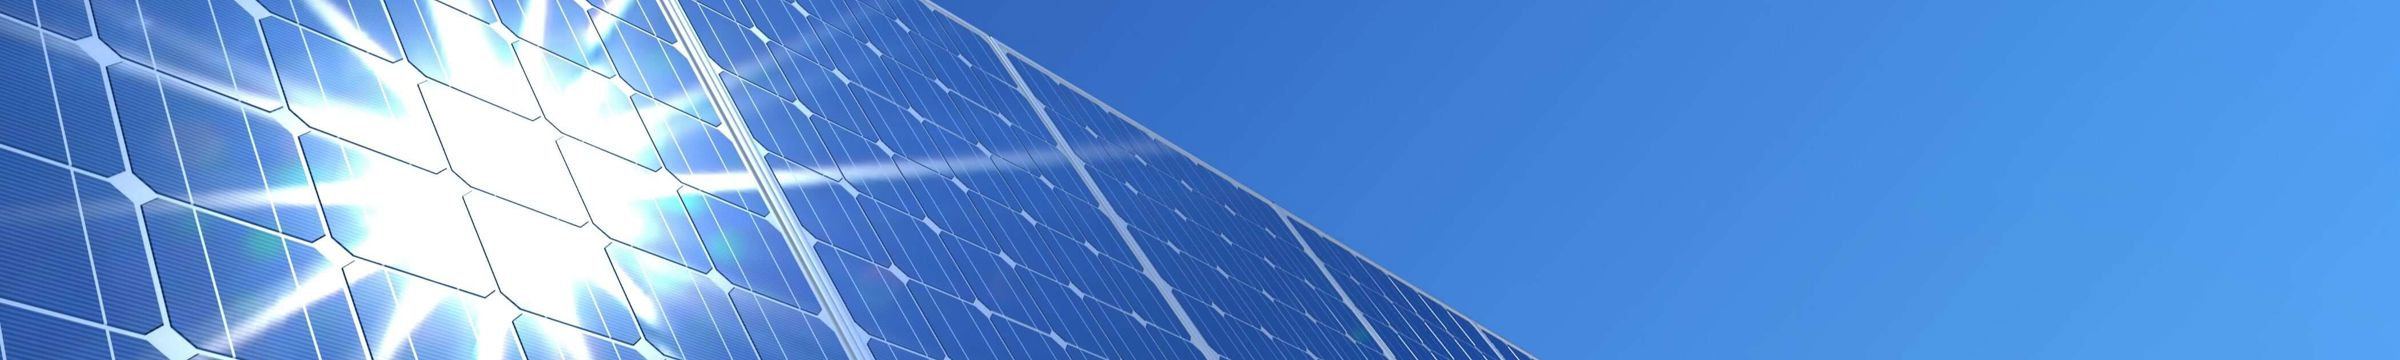 Reflejo del sol en panel fotovoltaico Statkraft